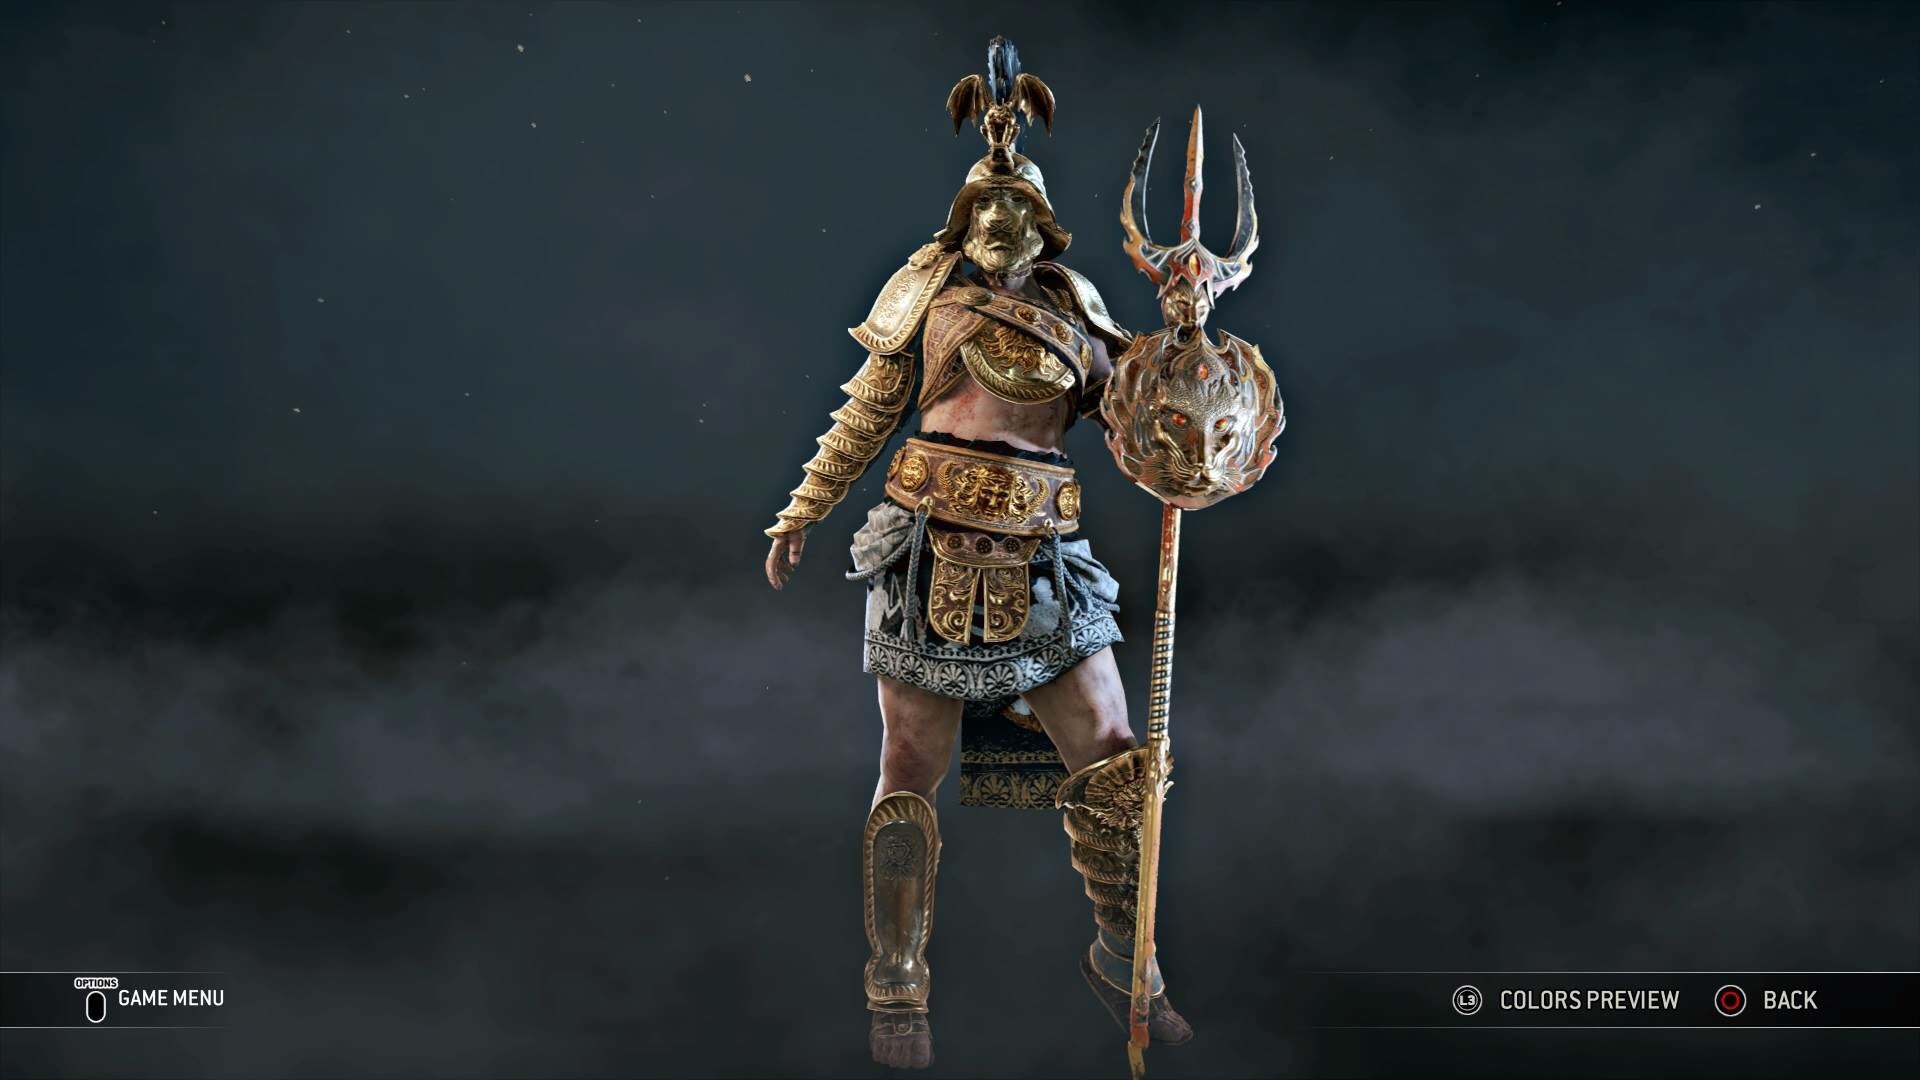 My rep 11 gladiator